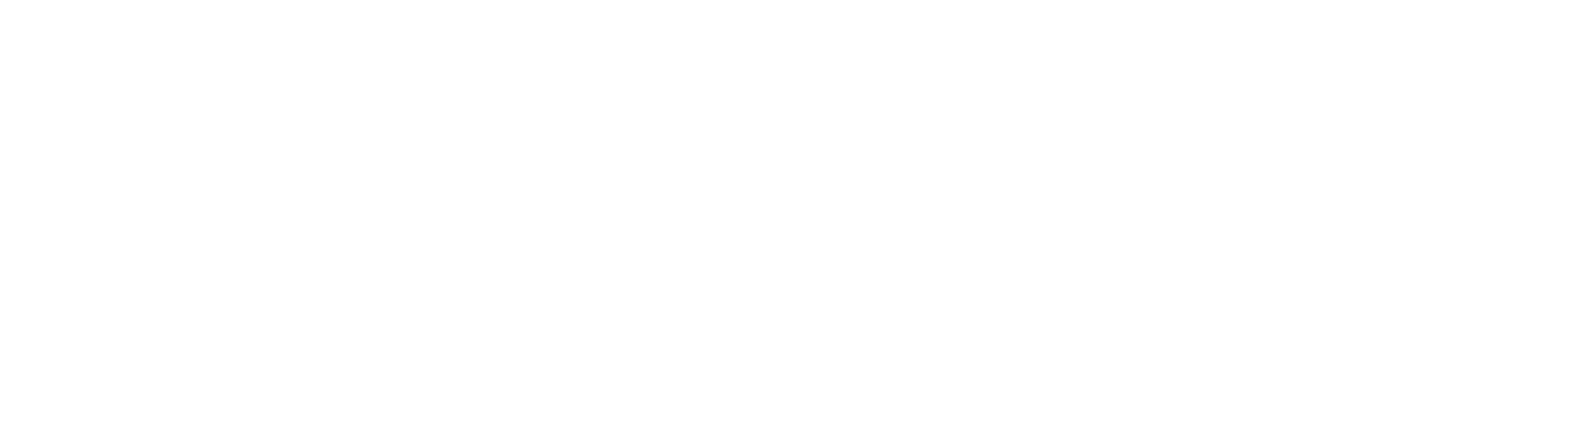 Inspira Technologies Logo groß für dunkle Hintergründe (transparentes PNG)